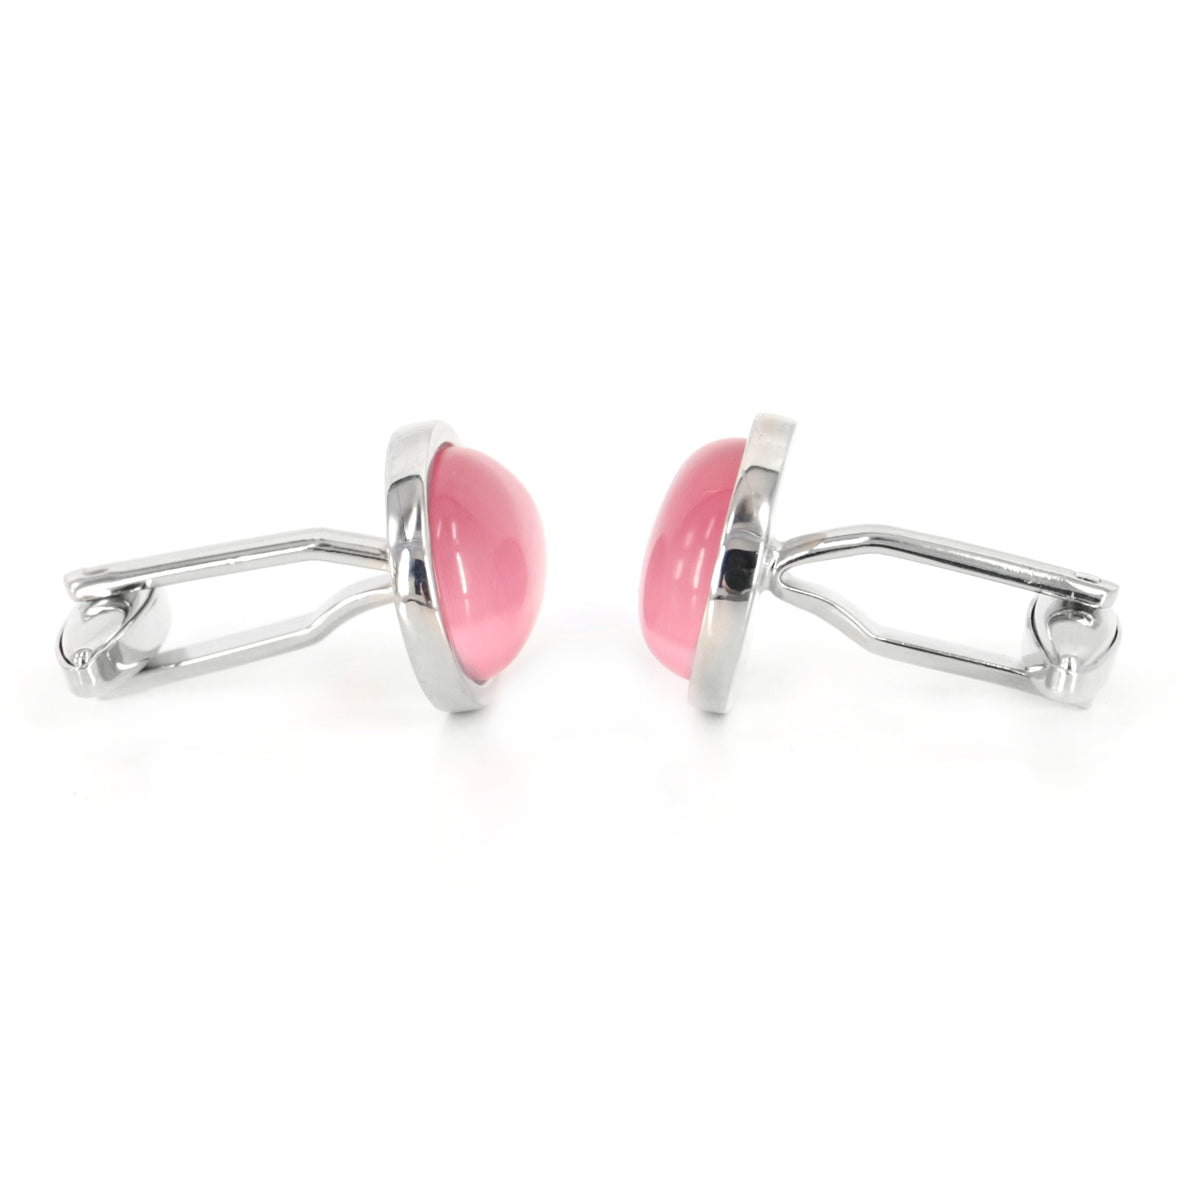 Oval Light Pink Fibre Optic Glass Cufflinks (Online Exclusive)